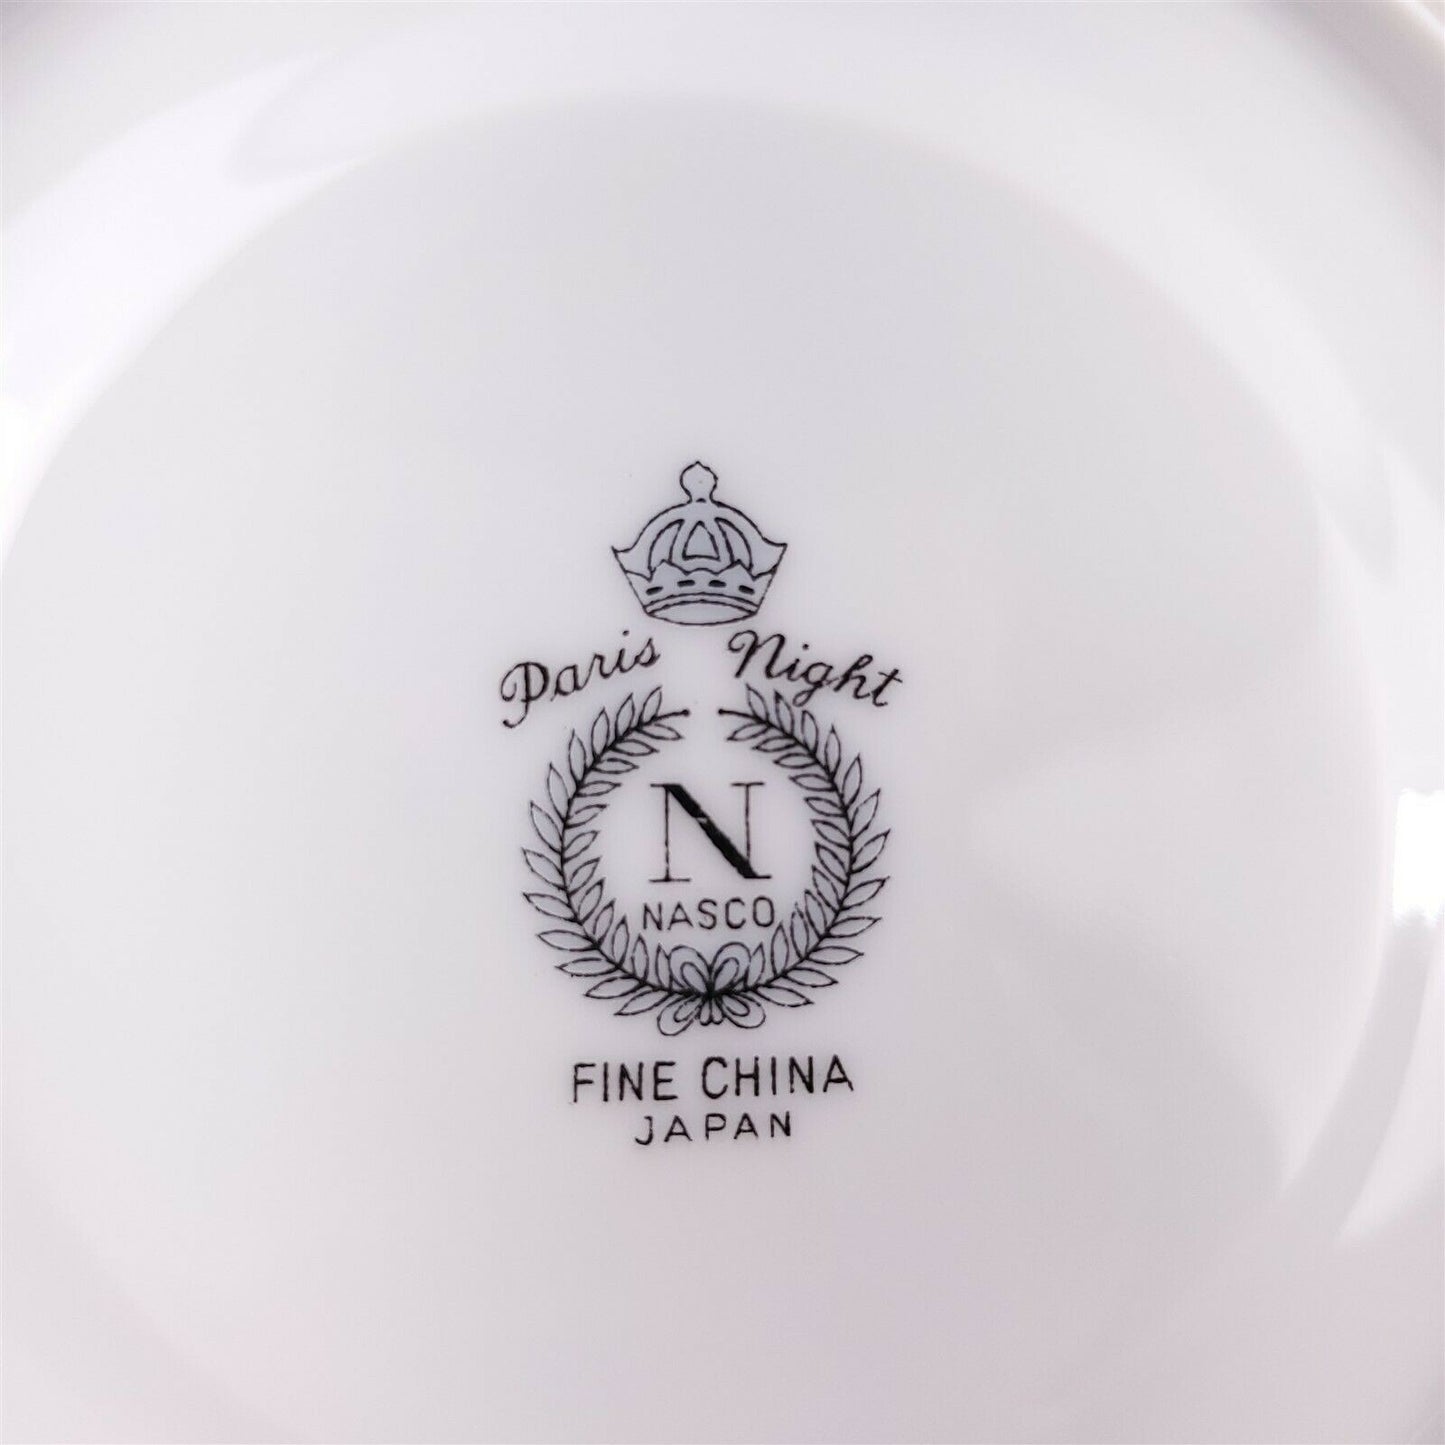 6 Sets Nasco Paris Night Tea Cups & Saucers Vintage Japan Fine China